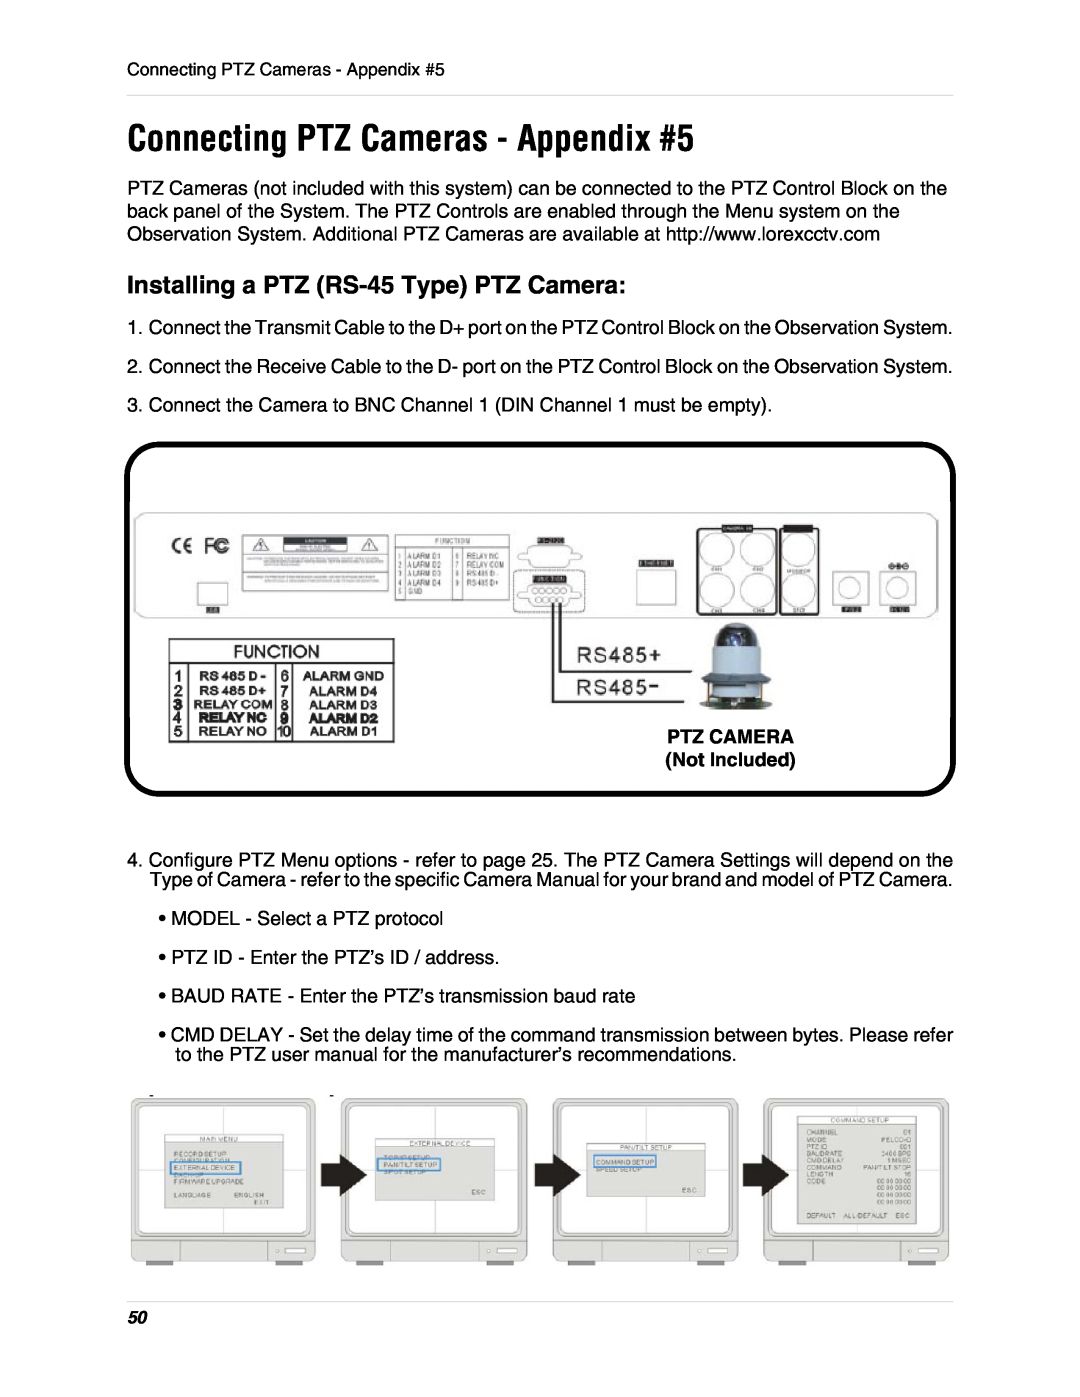 LOREX Technology L15D400 instruction manual Connecting PTZ Cameras - Appendix #5, Installing a PTZ RS-45Type PTZ Camera 